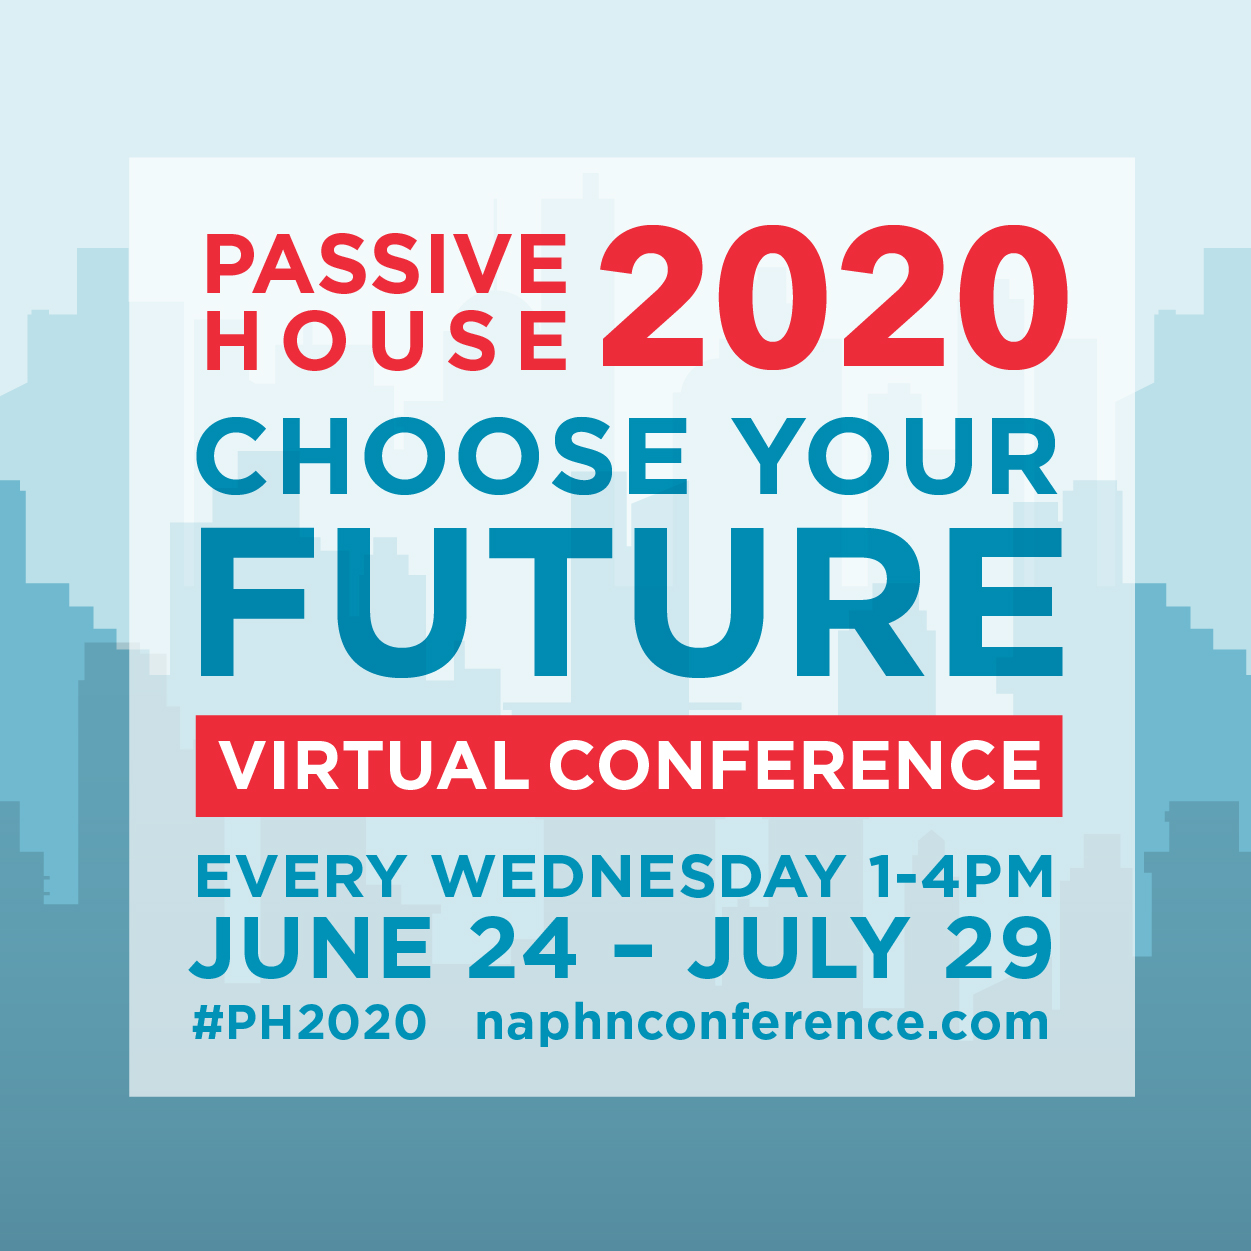 Passive House 2020 - Choose Your Future